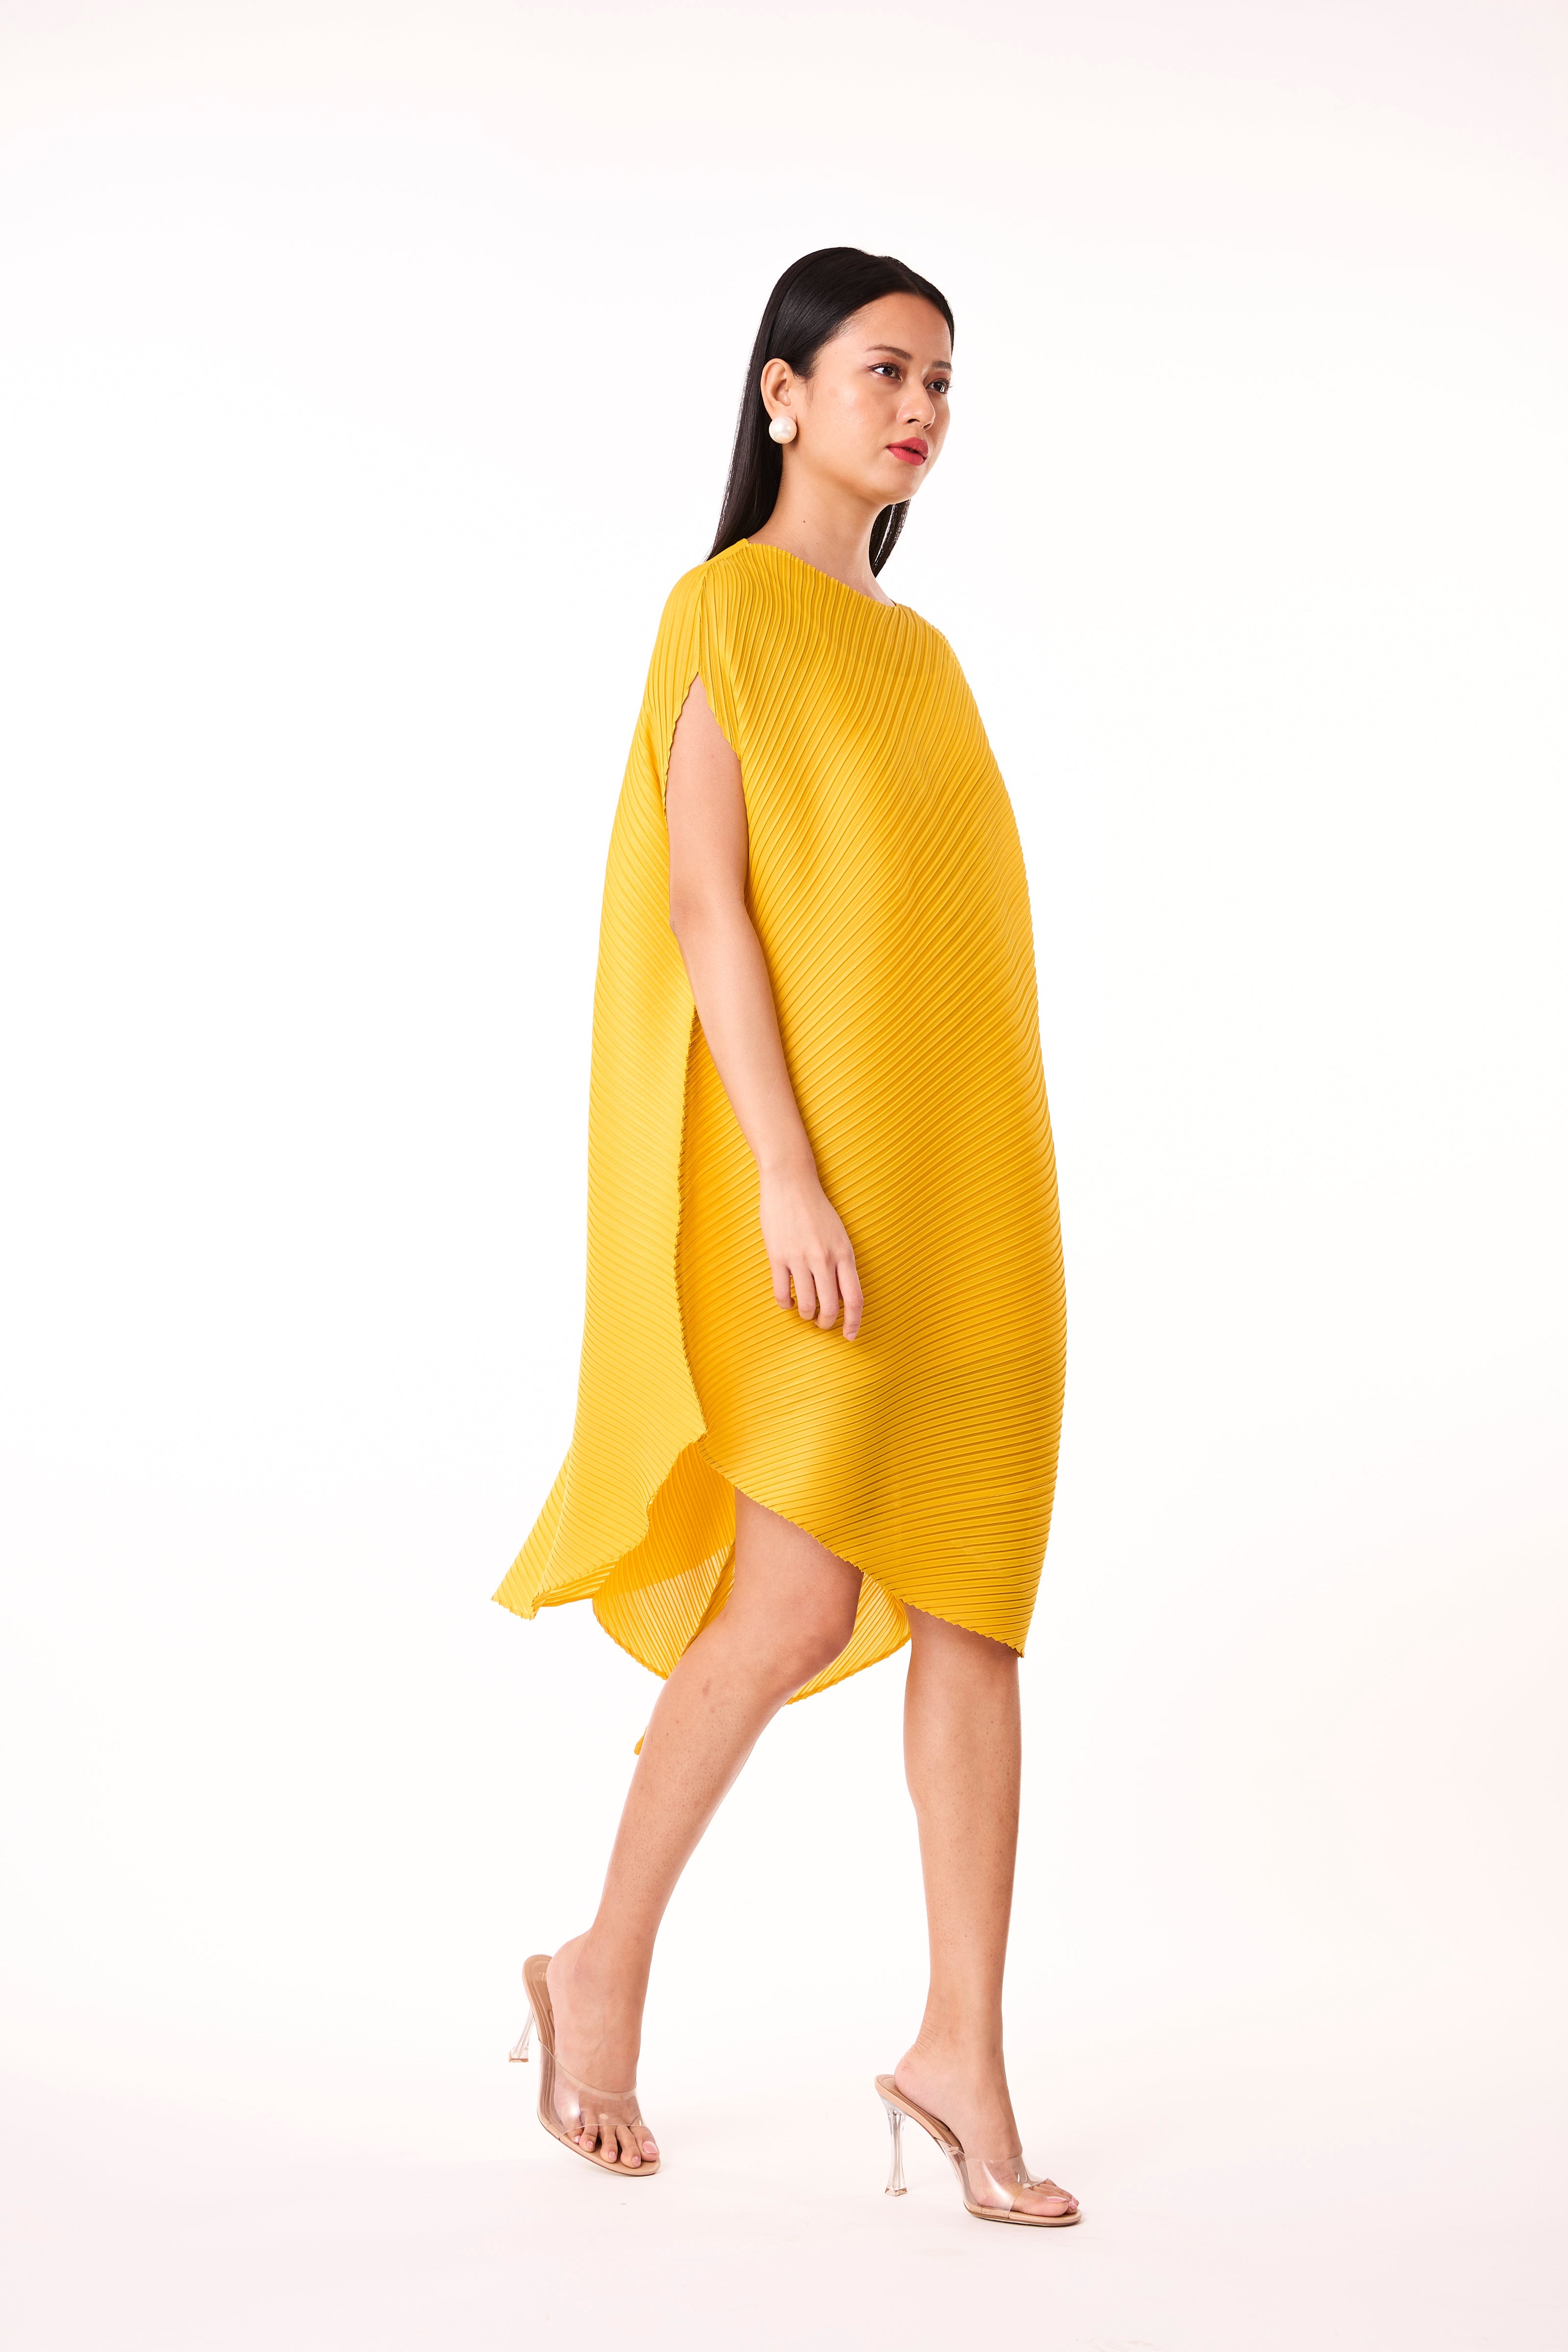 Lanna Dress - Yellow